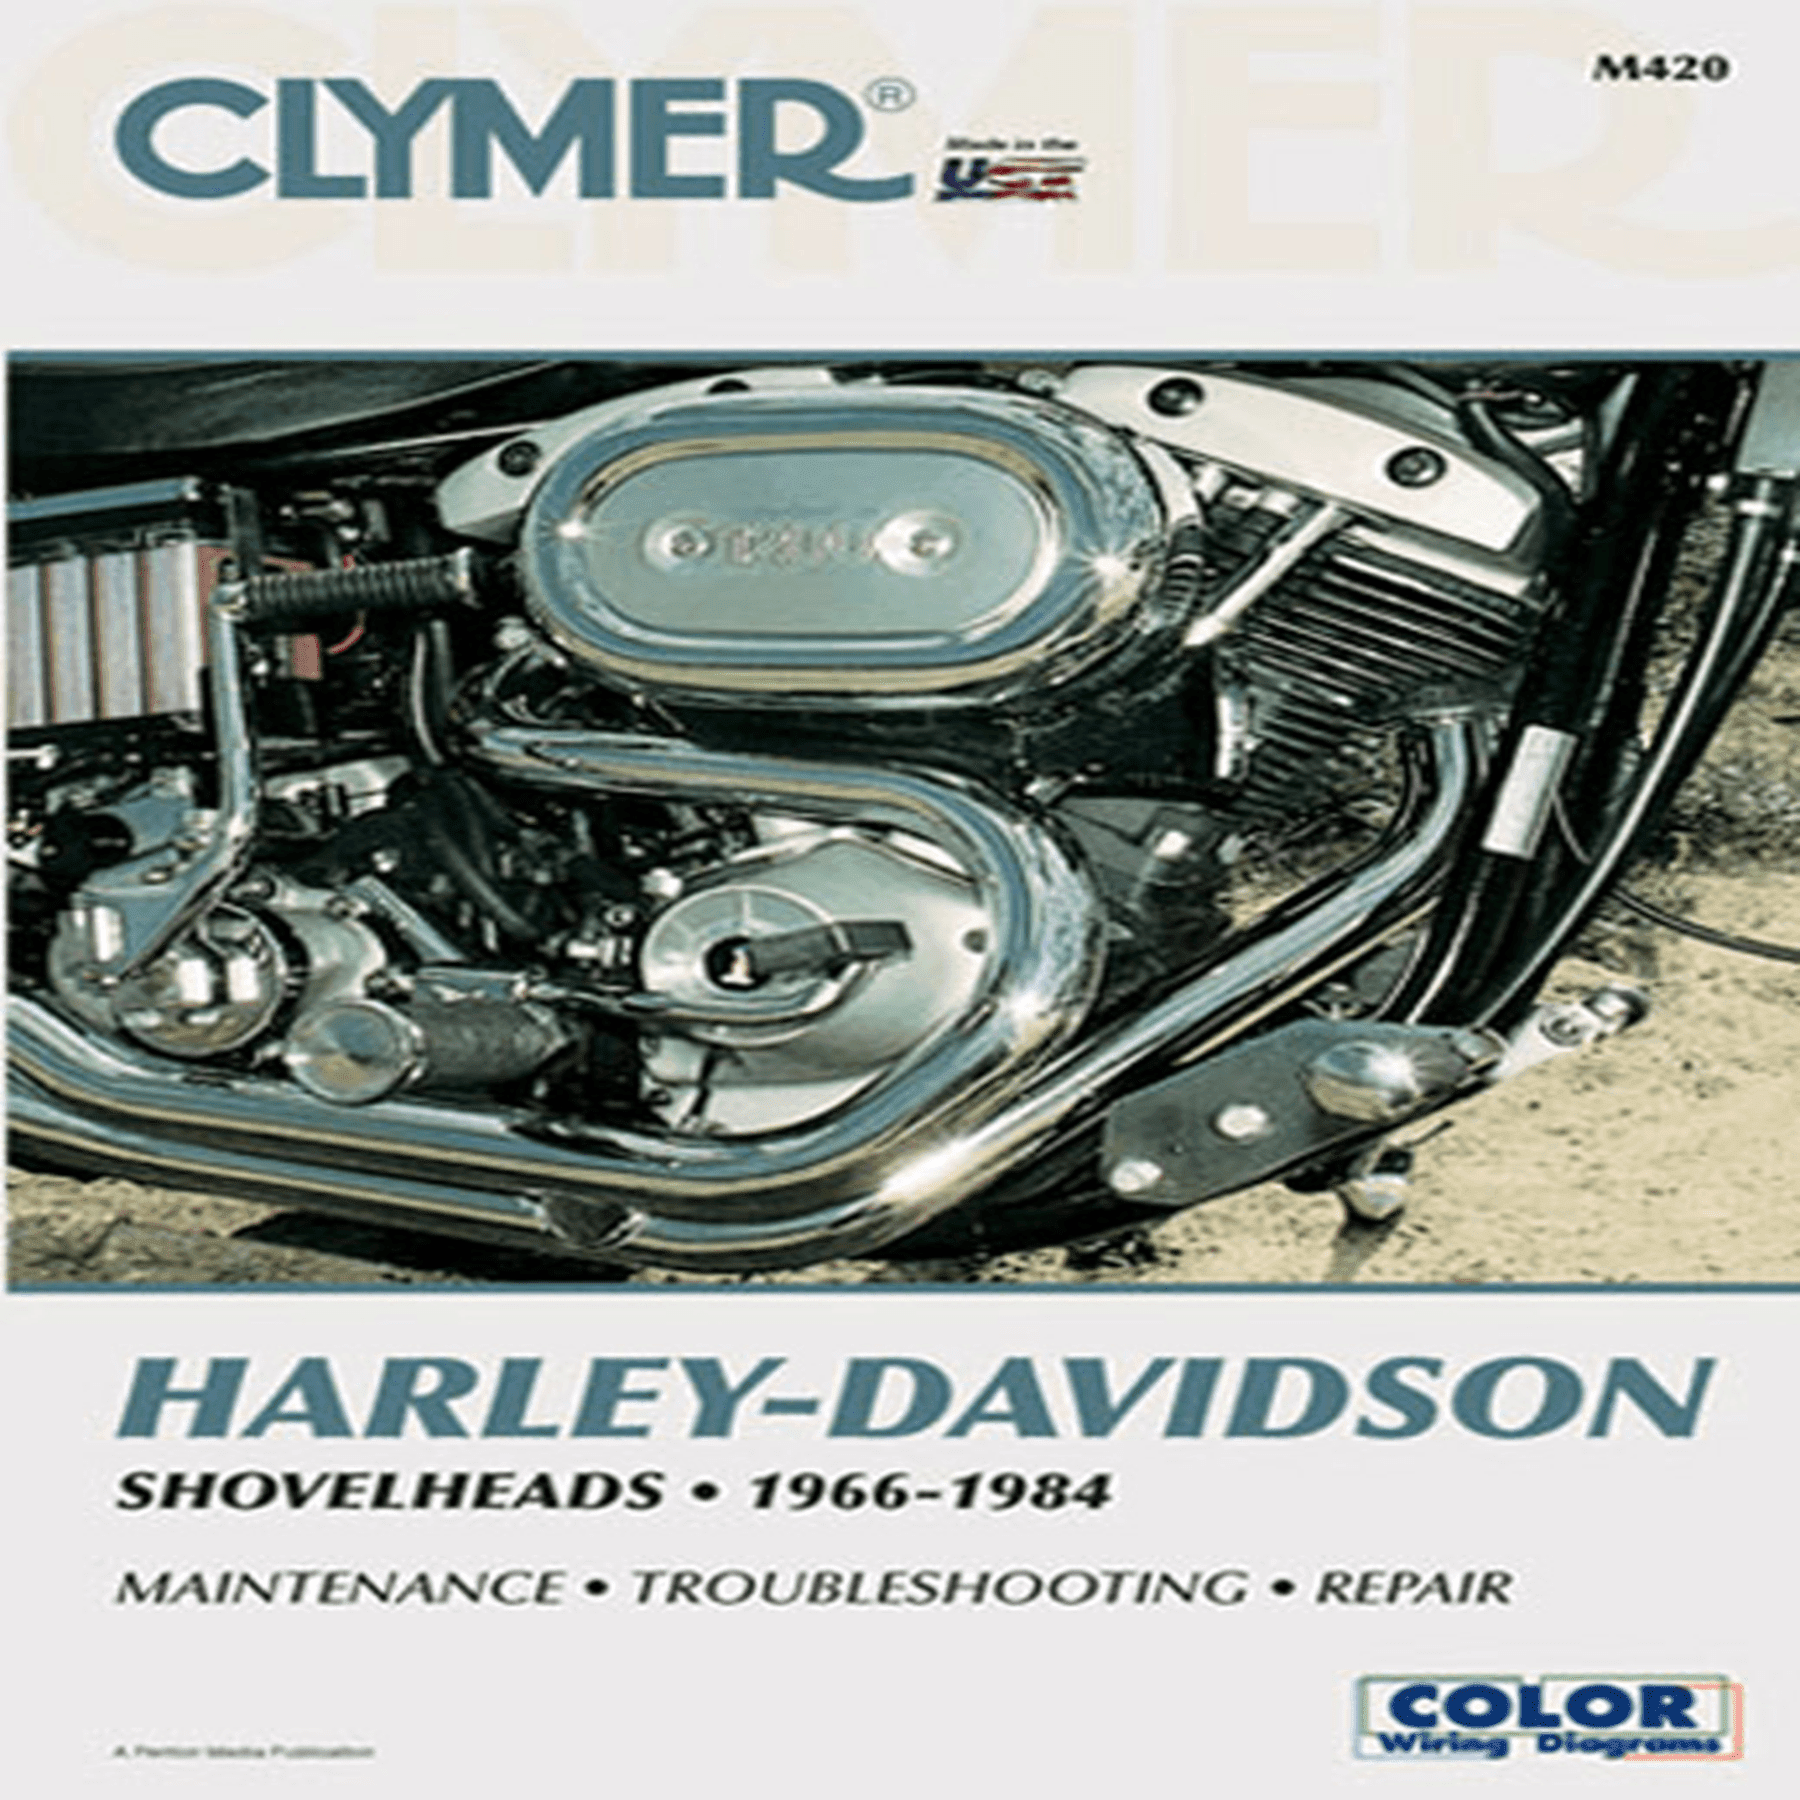 Harley-Davidson Shovelhead Motorcycle 1966-1984 Clymer Repair Manual 